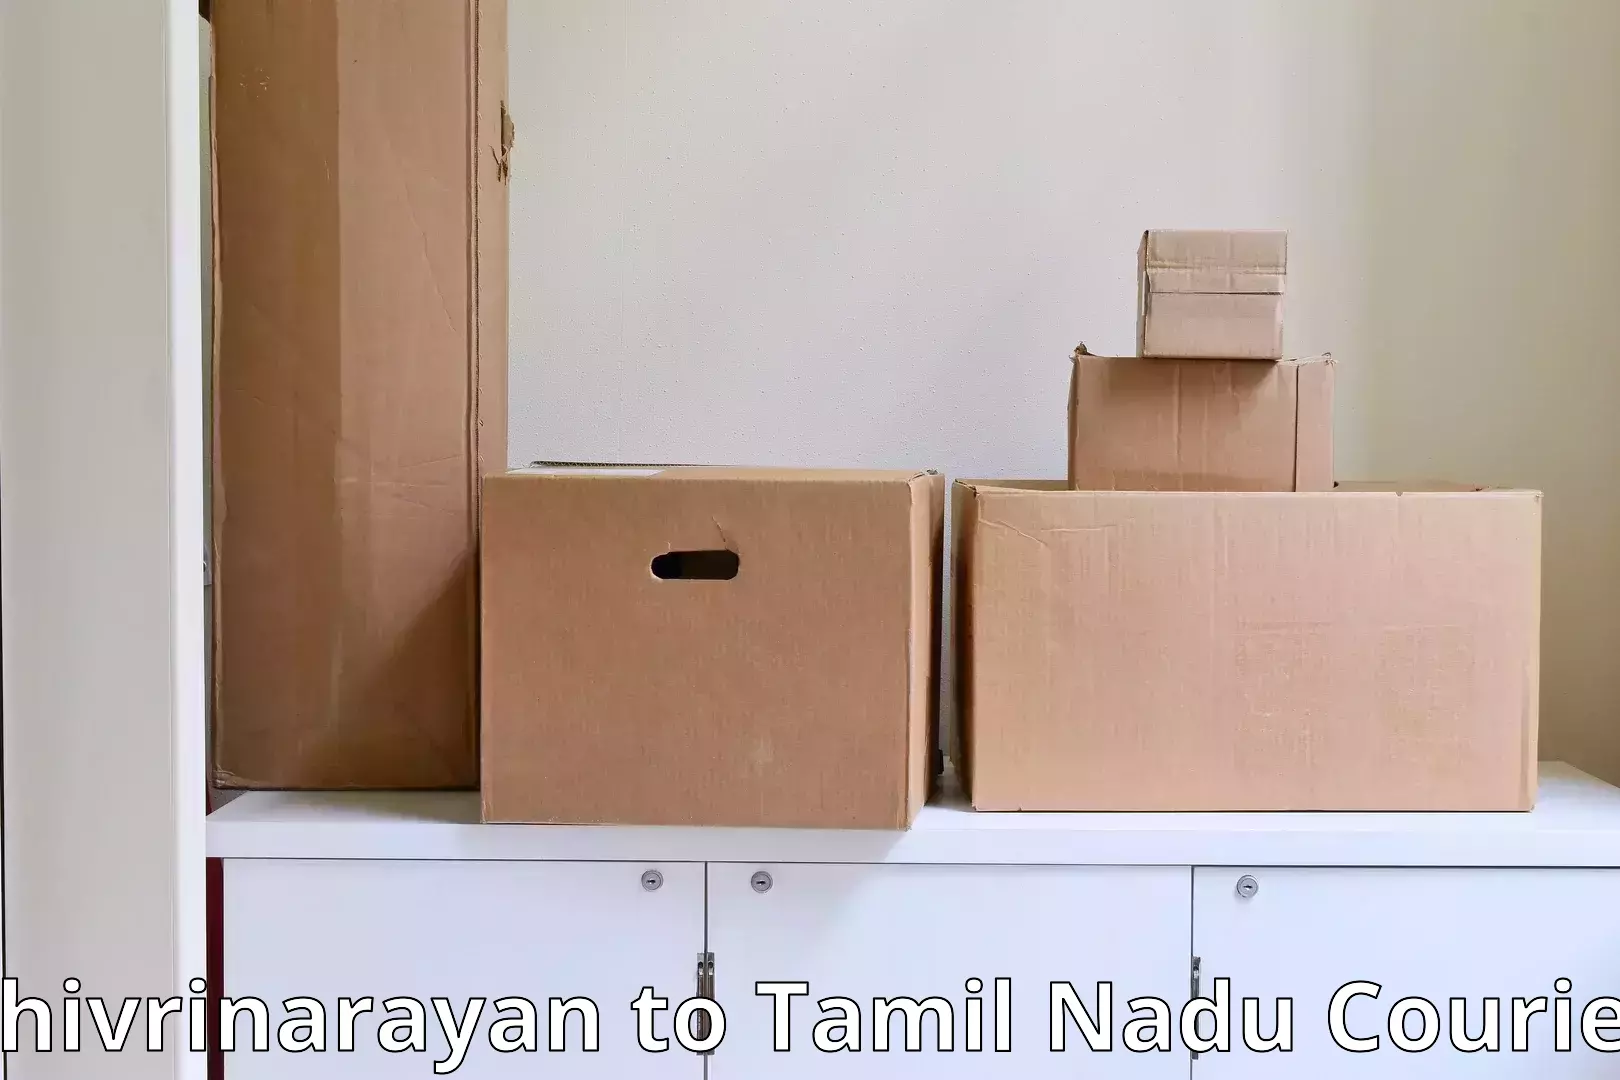 Stress-free moving Shivrinarayan to Tamil Nadu Veterinary and Animal Sciences University Chennai